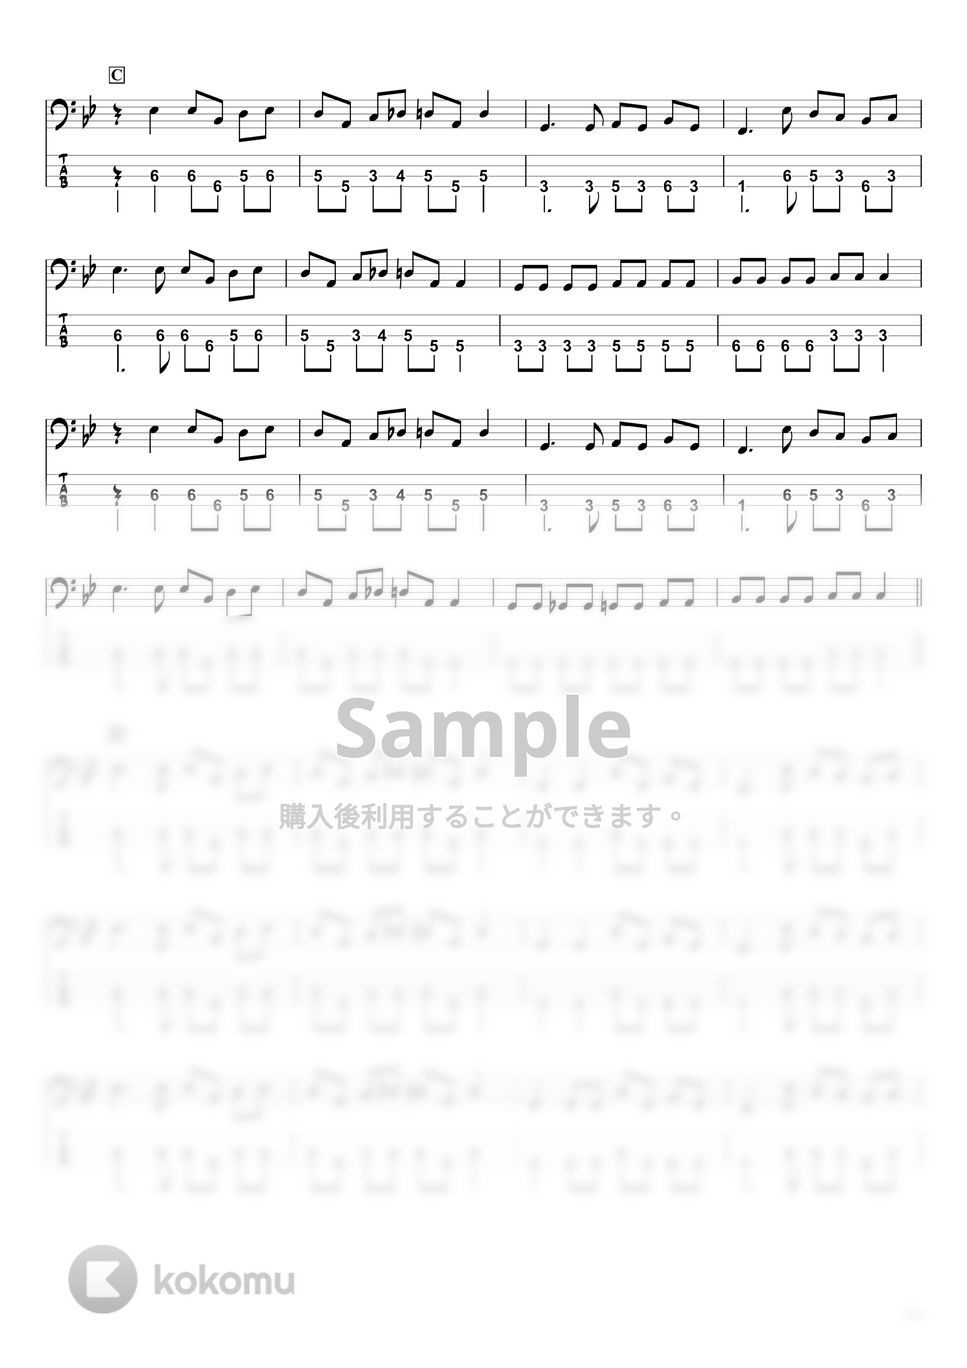 Kanaria - アイデンティティ (ベースTAB譜☆4弦ベース対応) by swbass